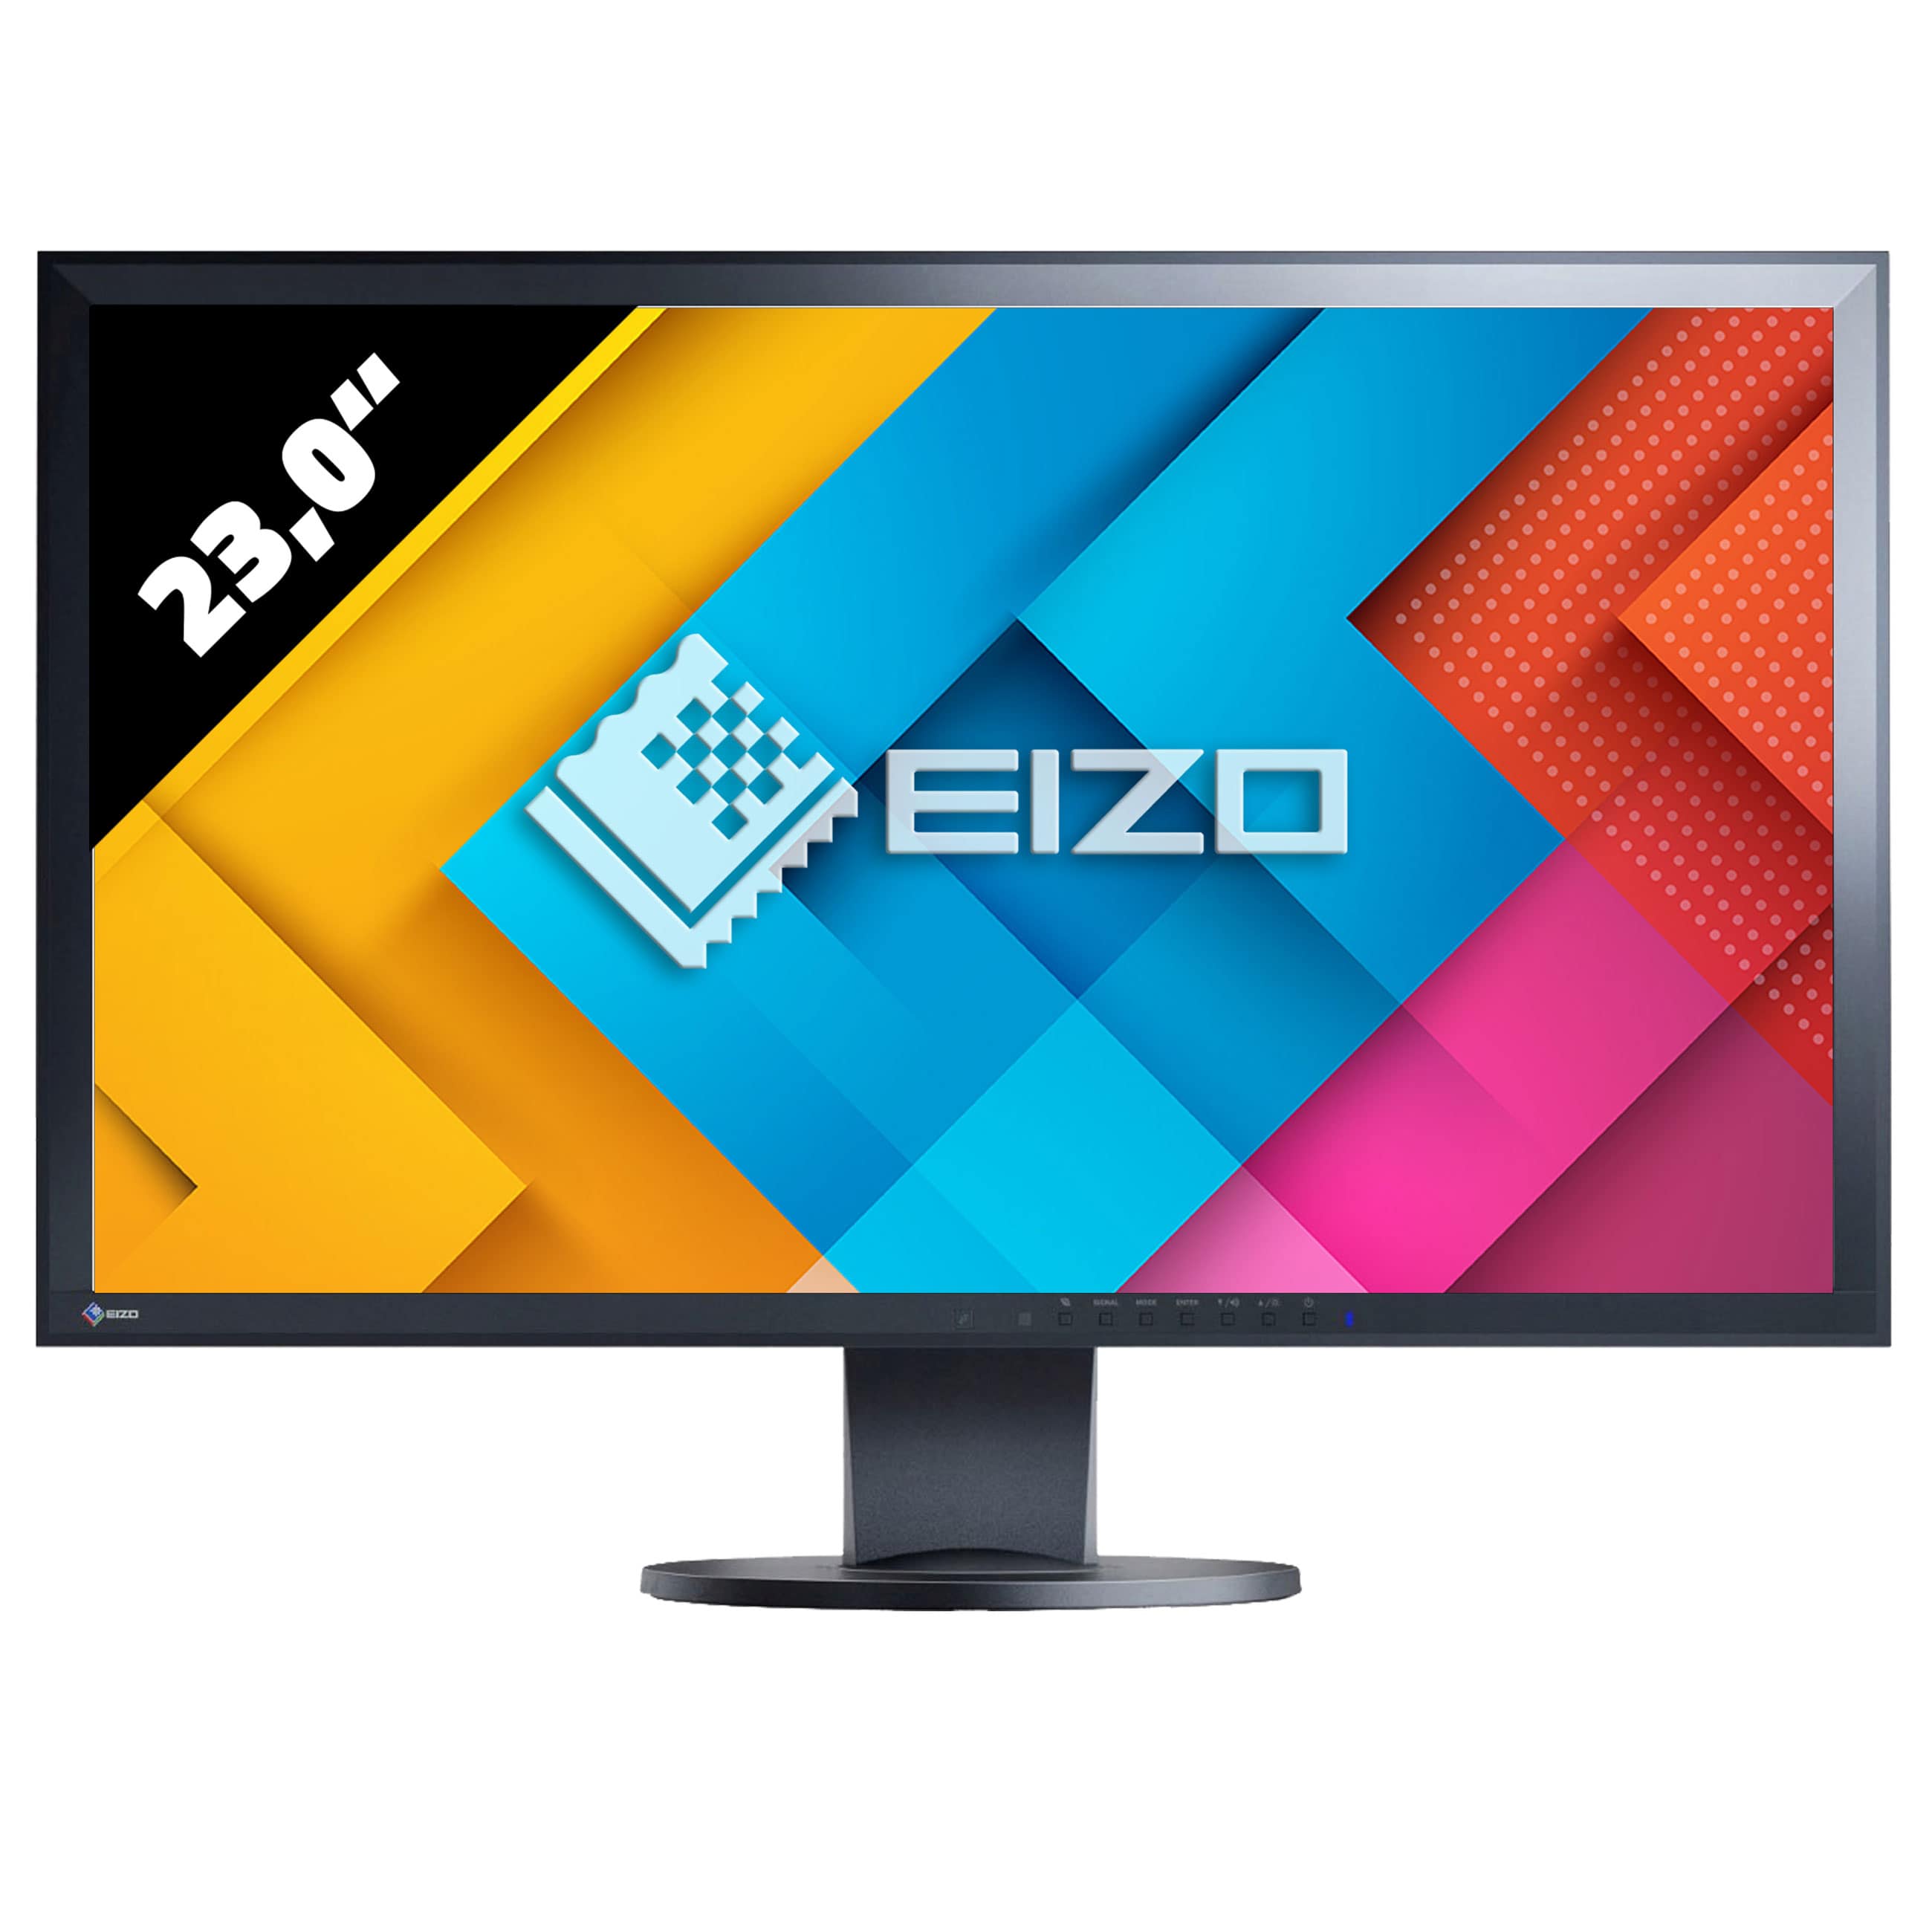 Eizo FlexScan EV2336W-BK - 1920 x 1080 - FHD - 23,0 Zoll - 6 ms - Schwarz